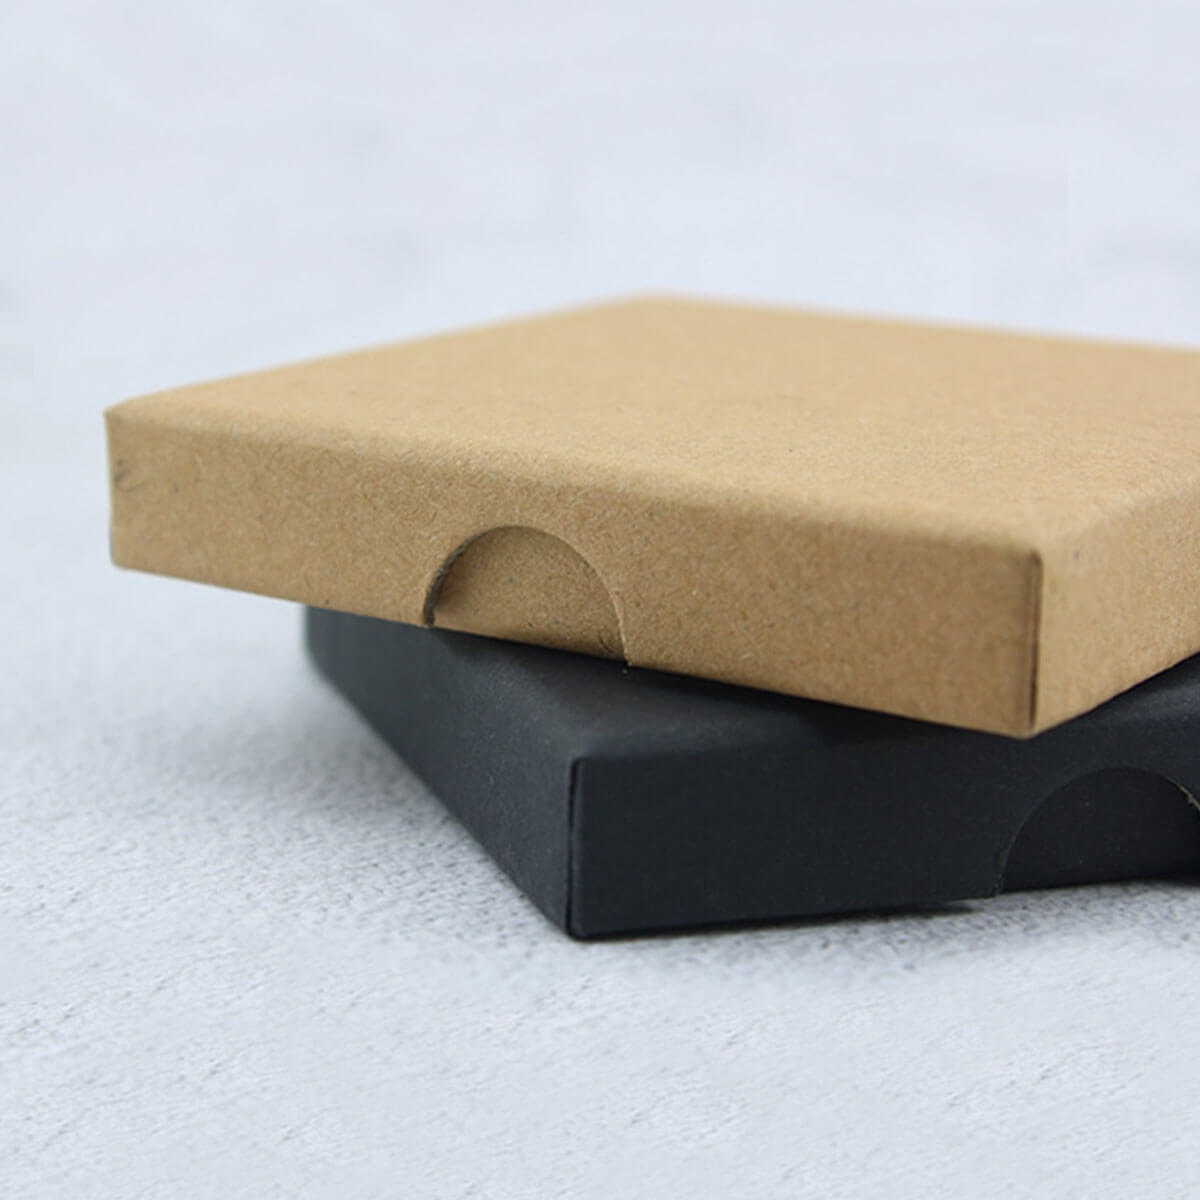 [32 шт. комплект ] подарочная коробка коробка упаковка упаковка box подарок упаковка аксессуары подарок упаковка 